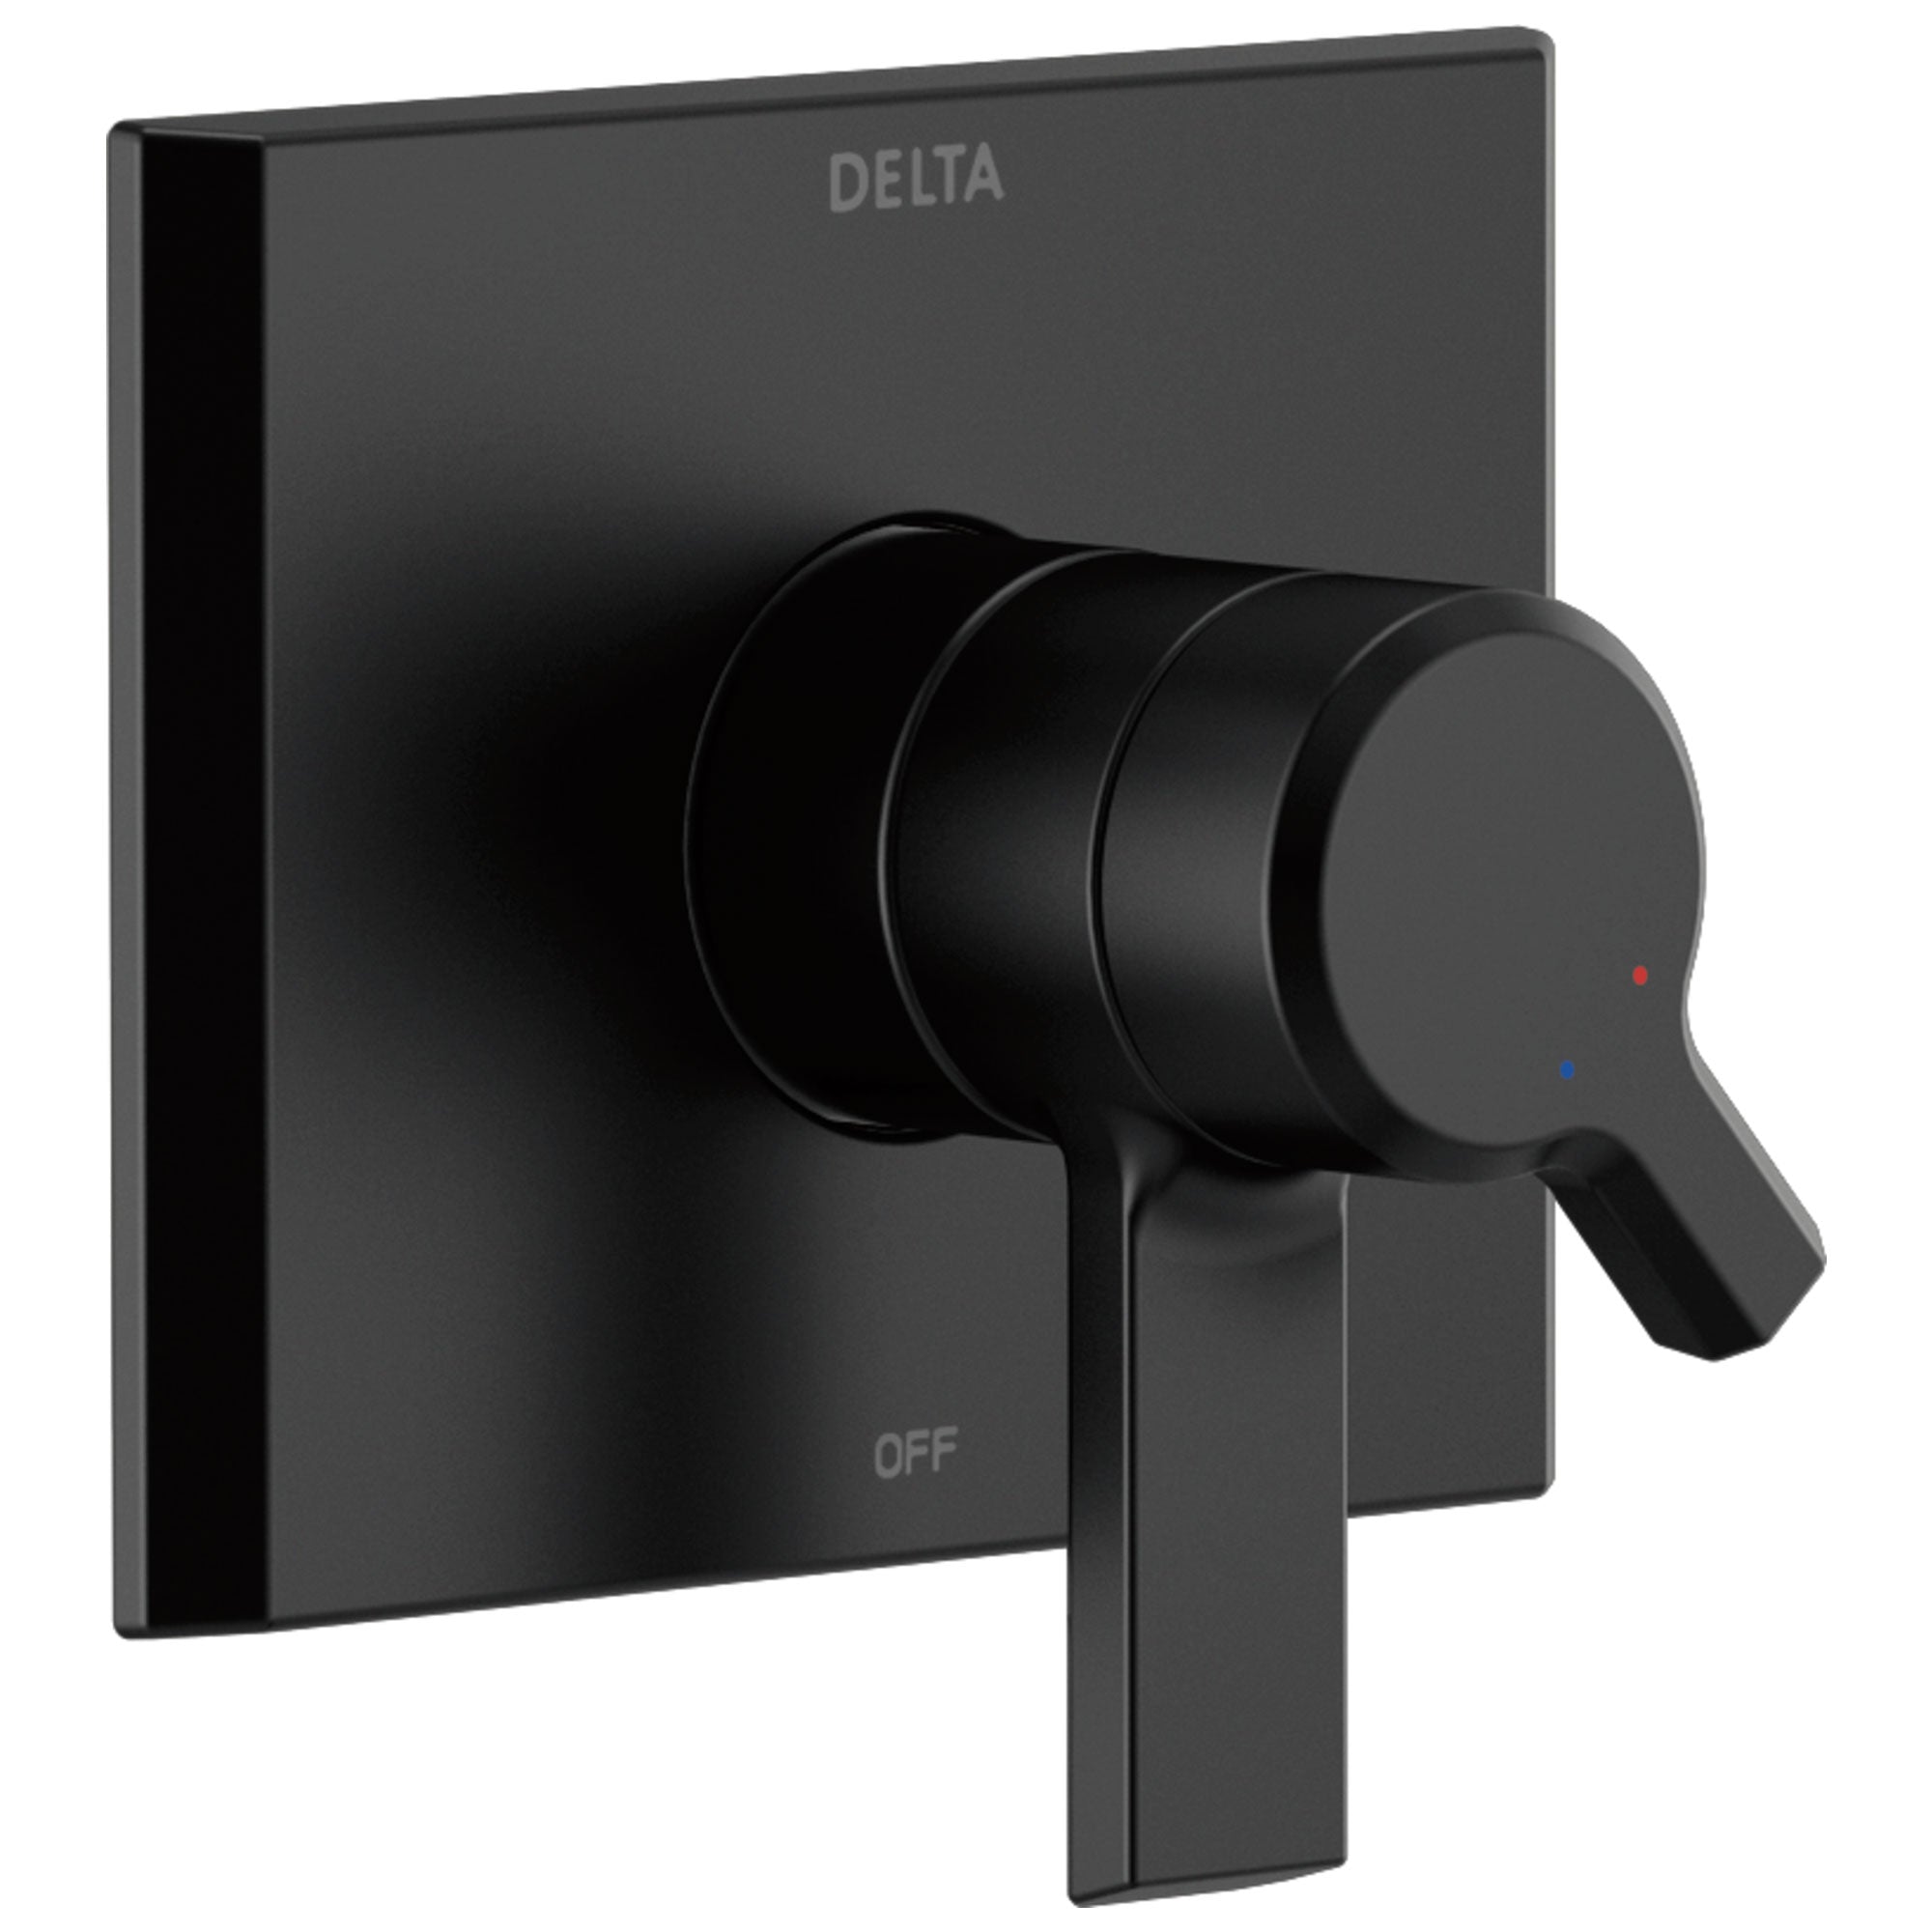 Delta Pivotal Matte Black Finish Monitor 17 Series Shower Faucet Control Only Trim Kit (Requires Valve) DT17099BL